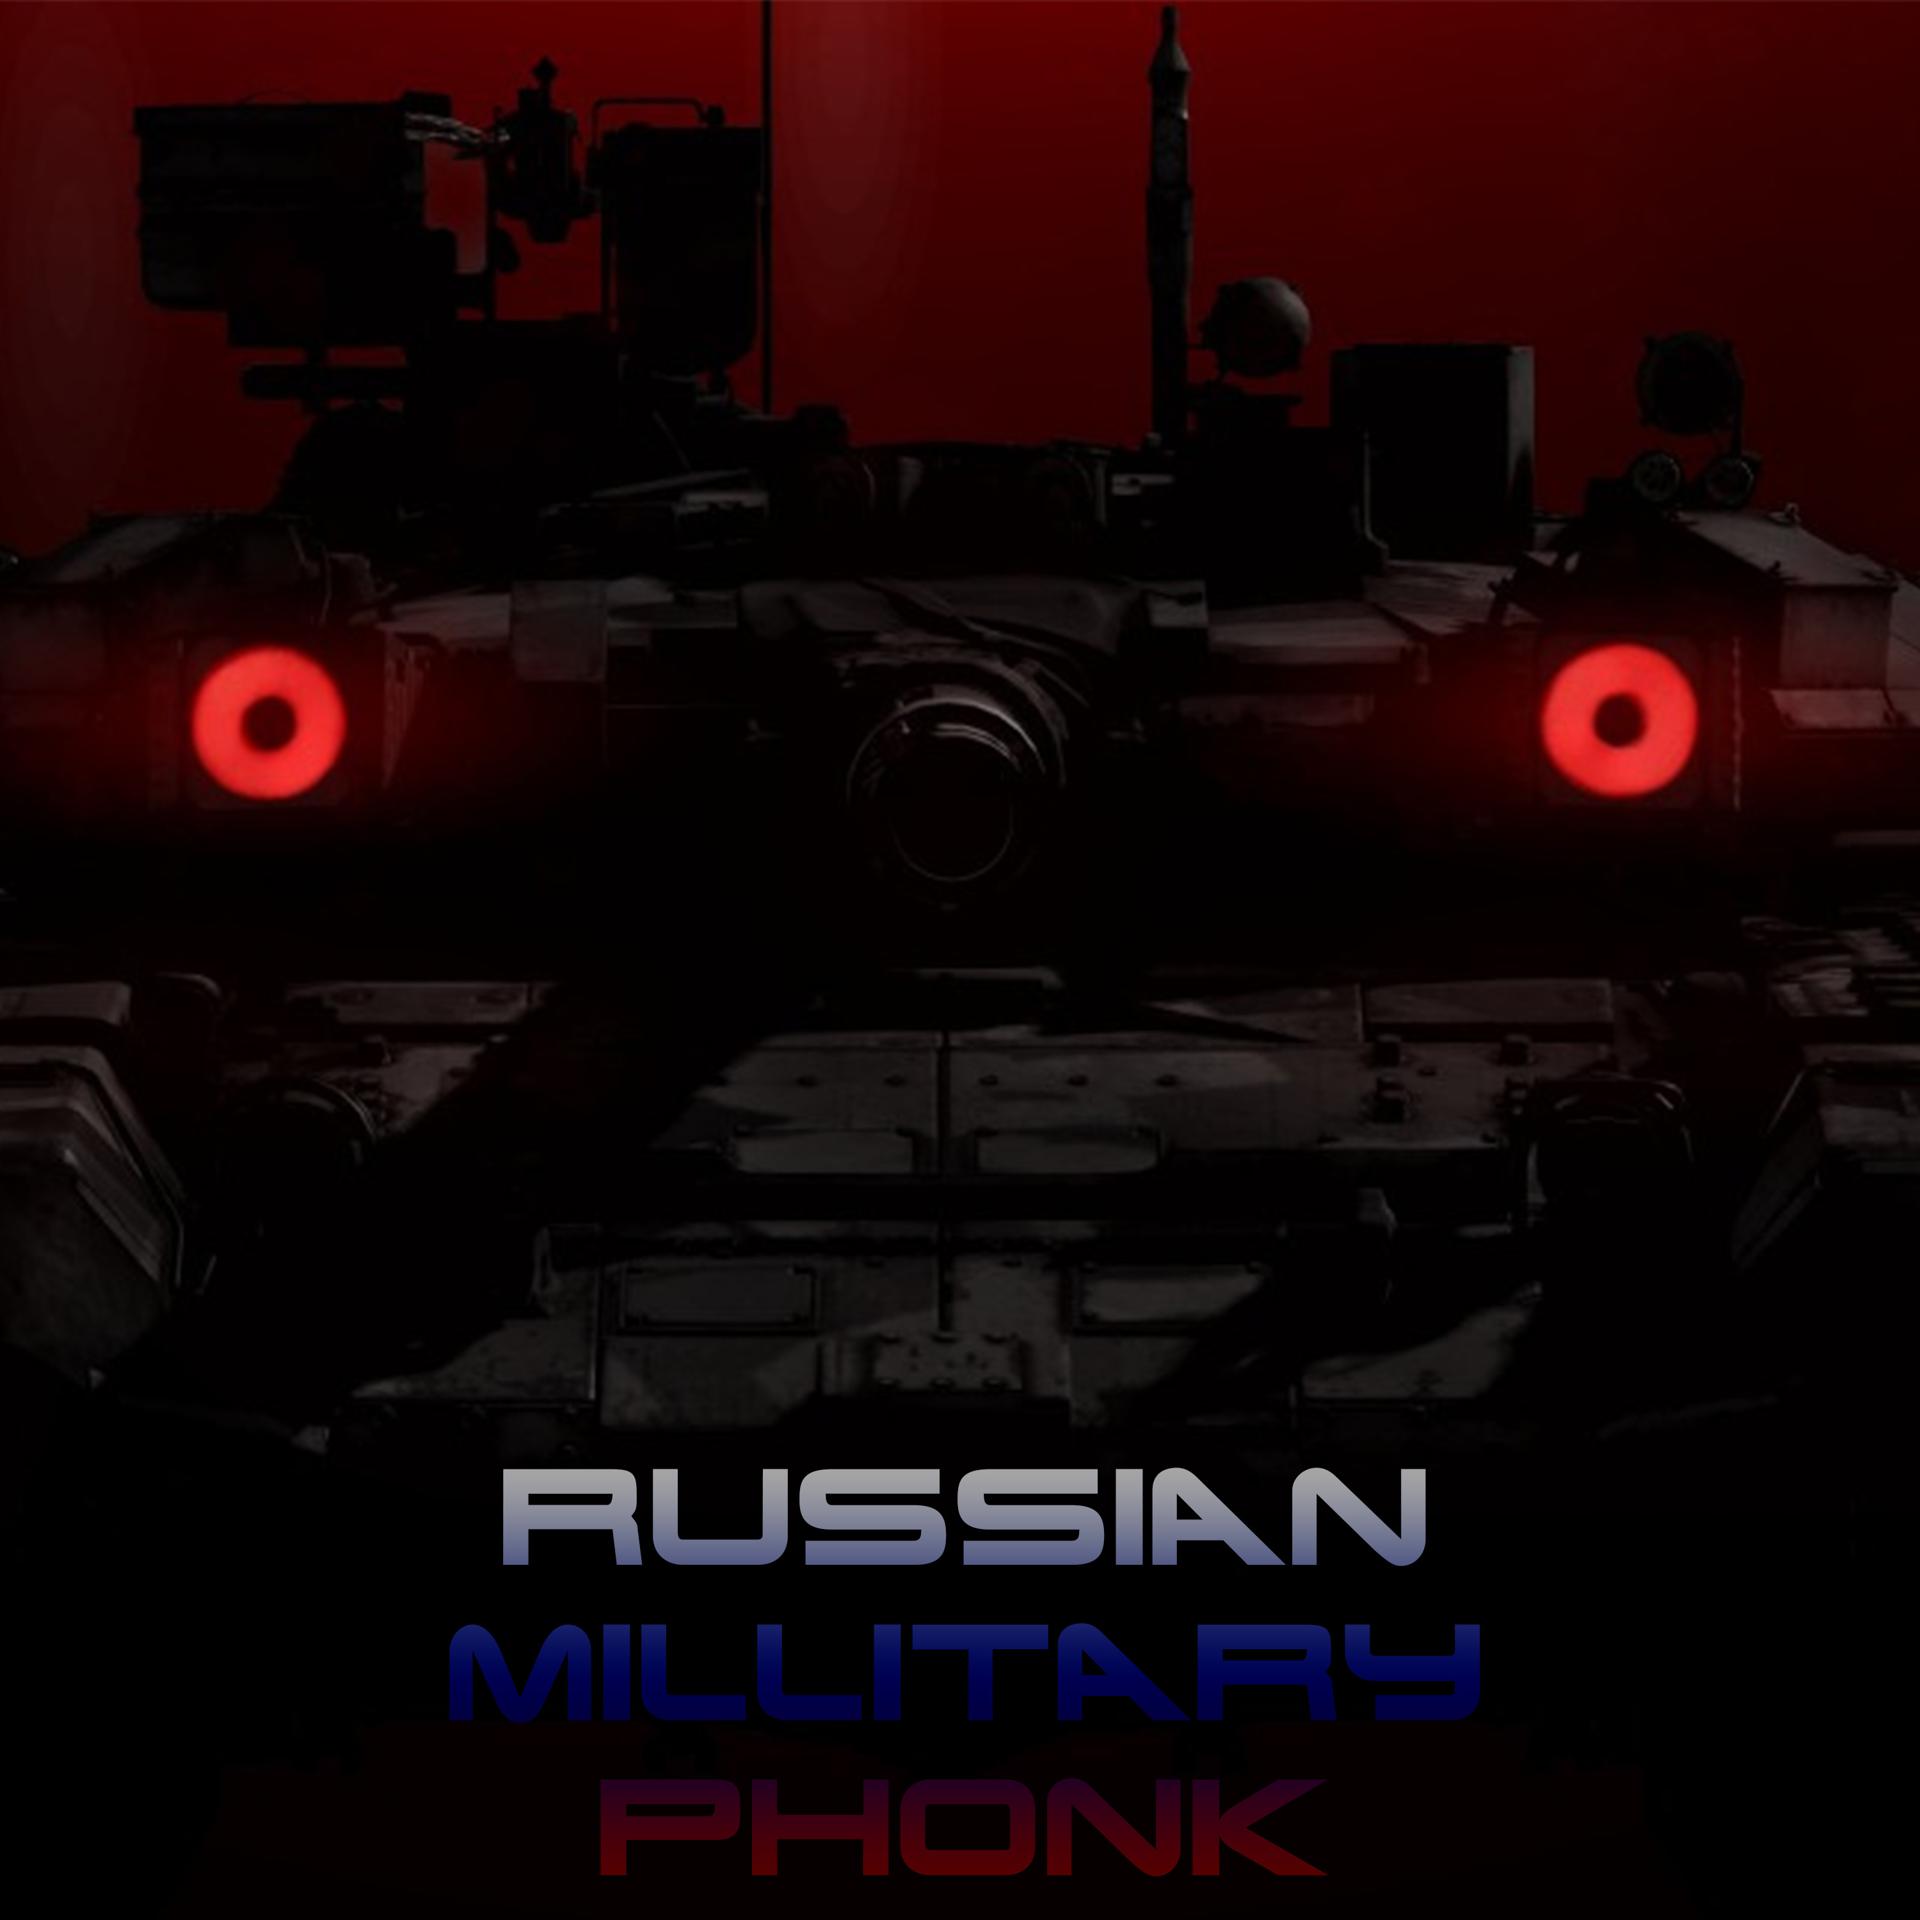 Постер альбома Russian Phonk